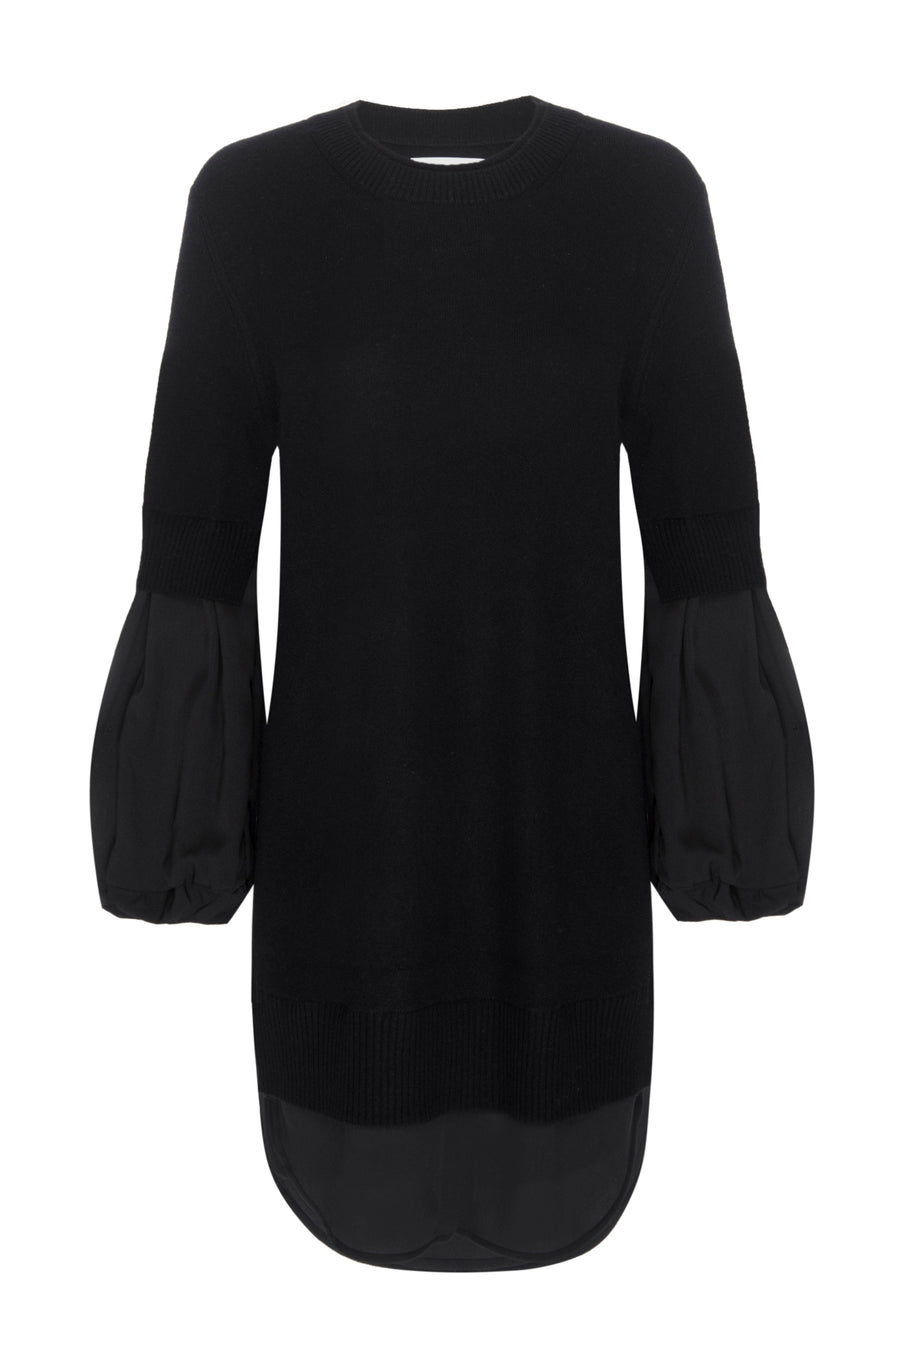 Ebella layered black mini sweater dress flat view